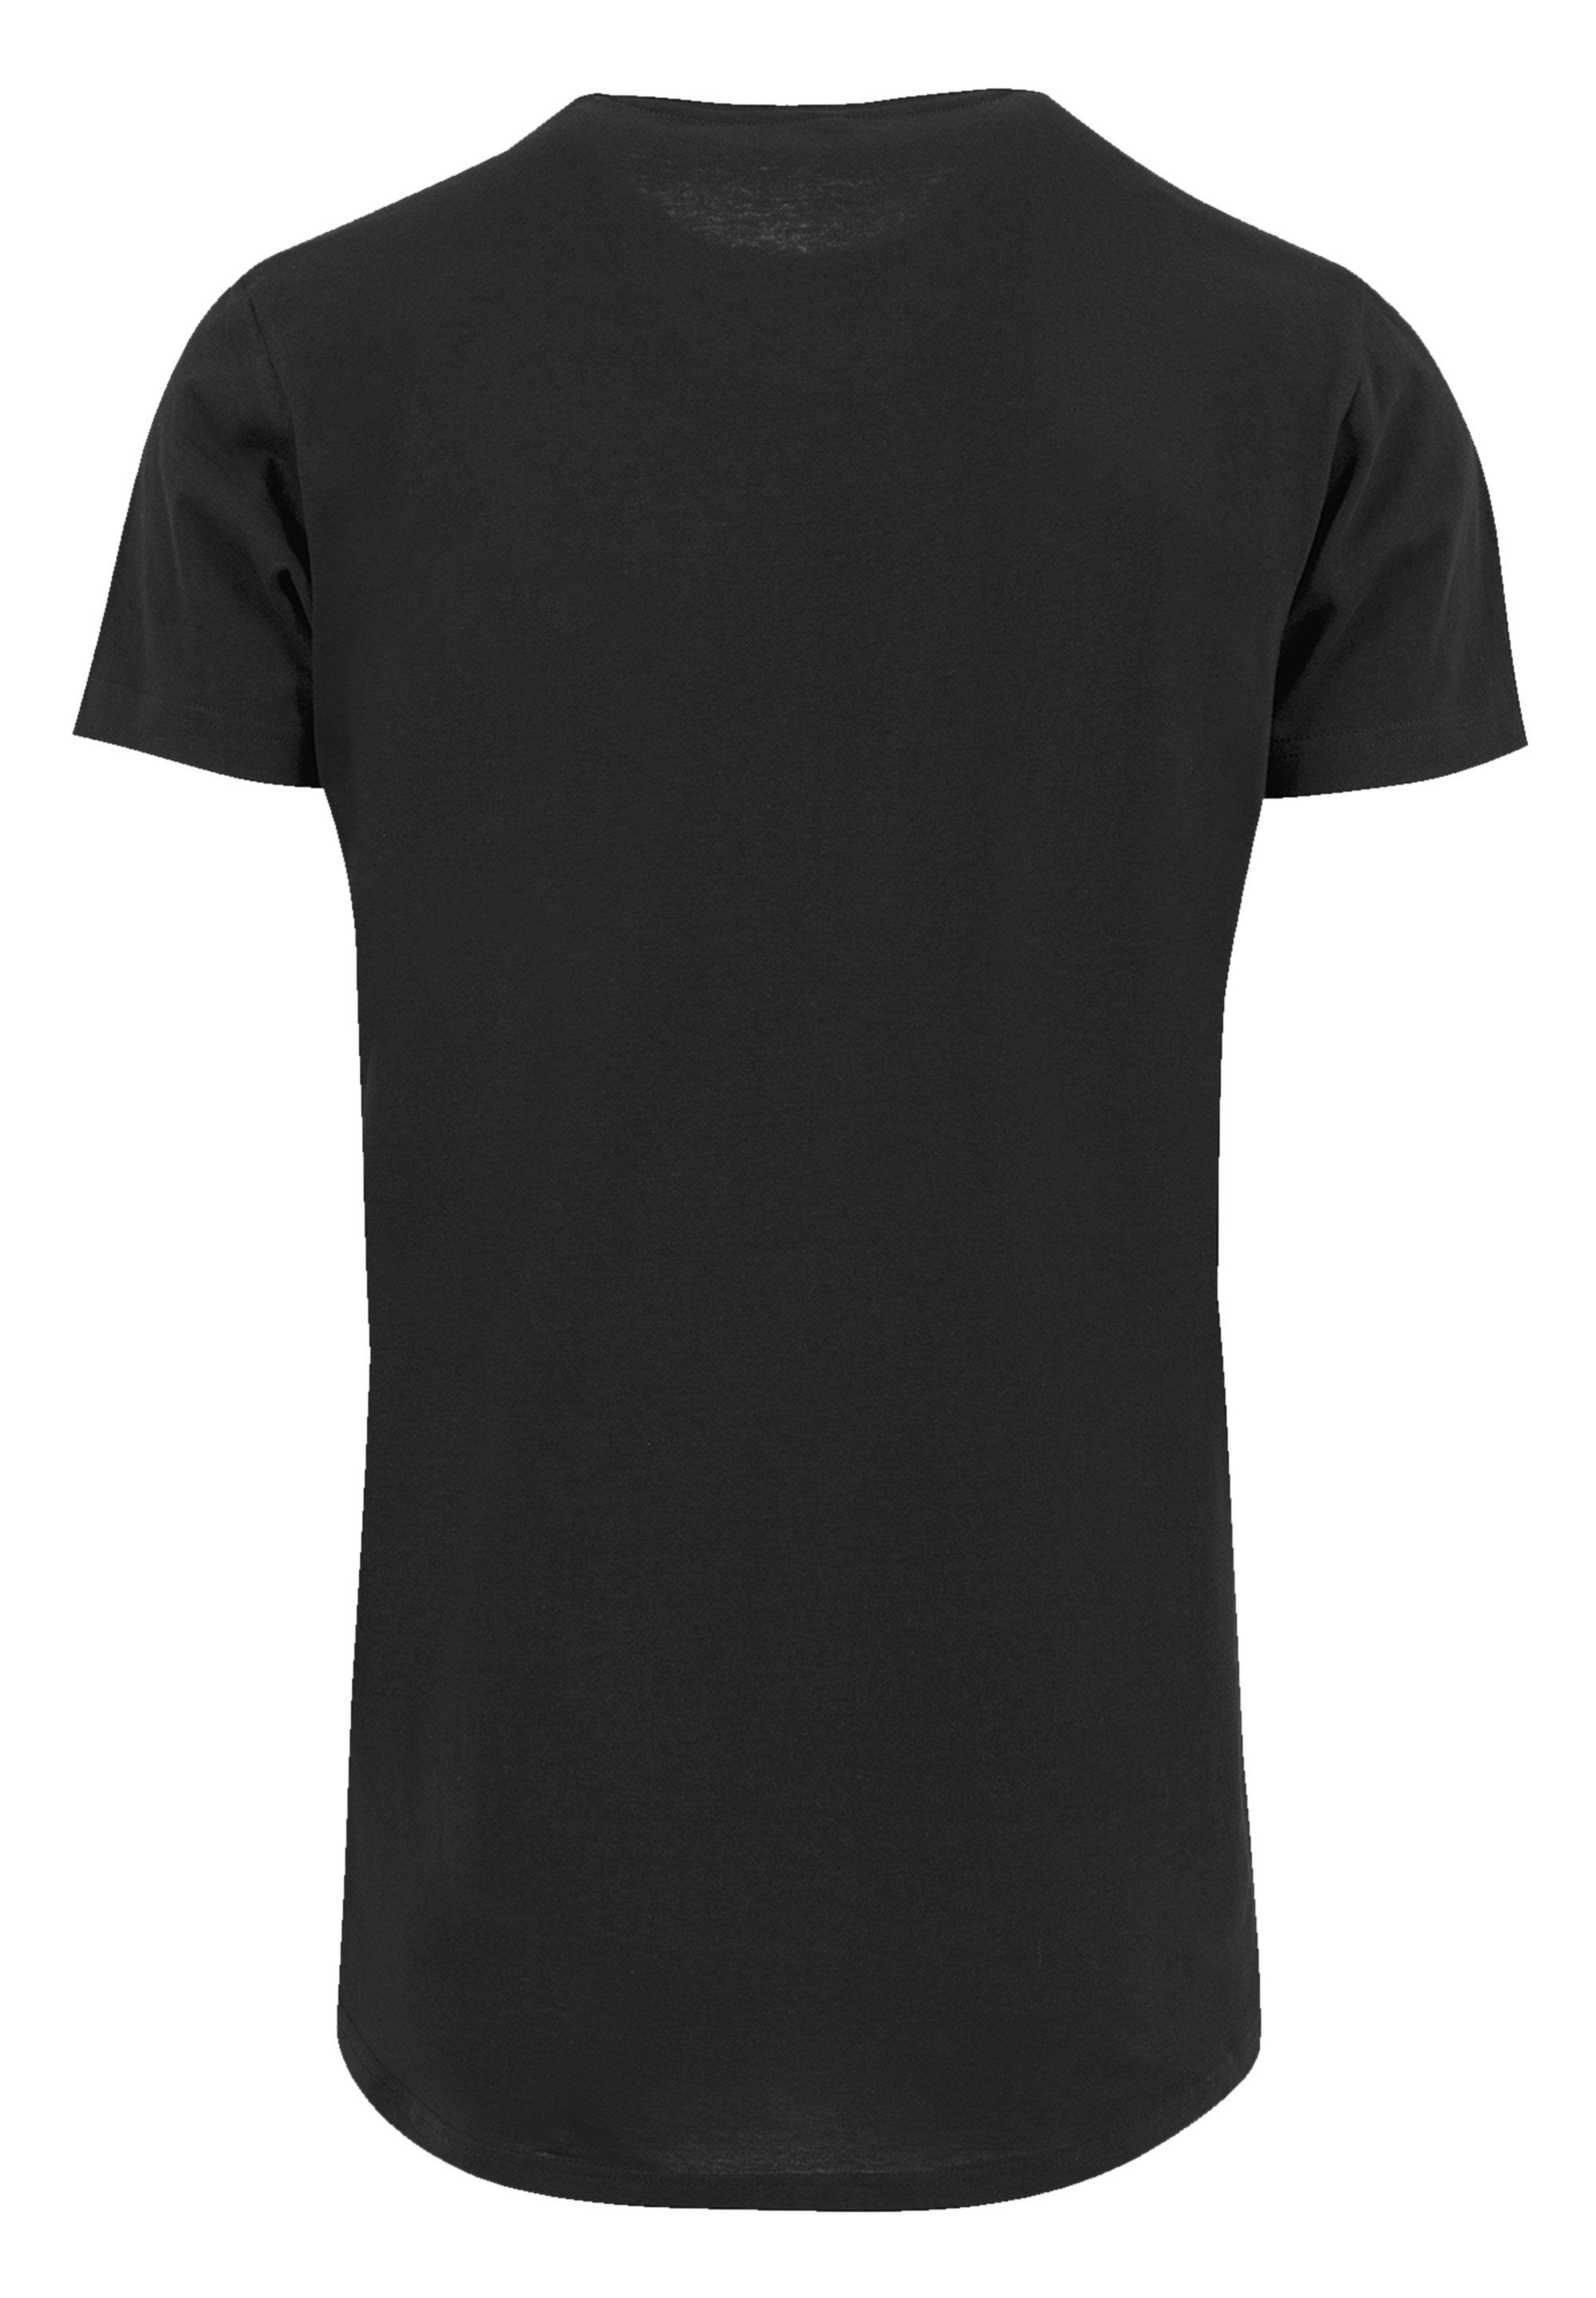 F4NT4STIC T-Shirt Marvel Punisher Battle Van II Premium Qualität, Extra  lang geschnittenes Herren T-Shirt